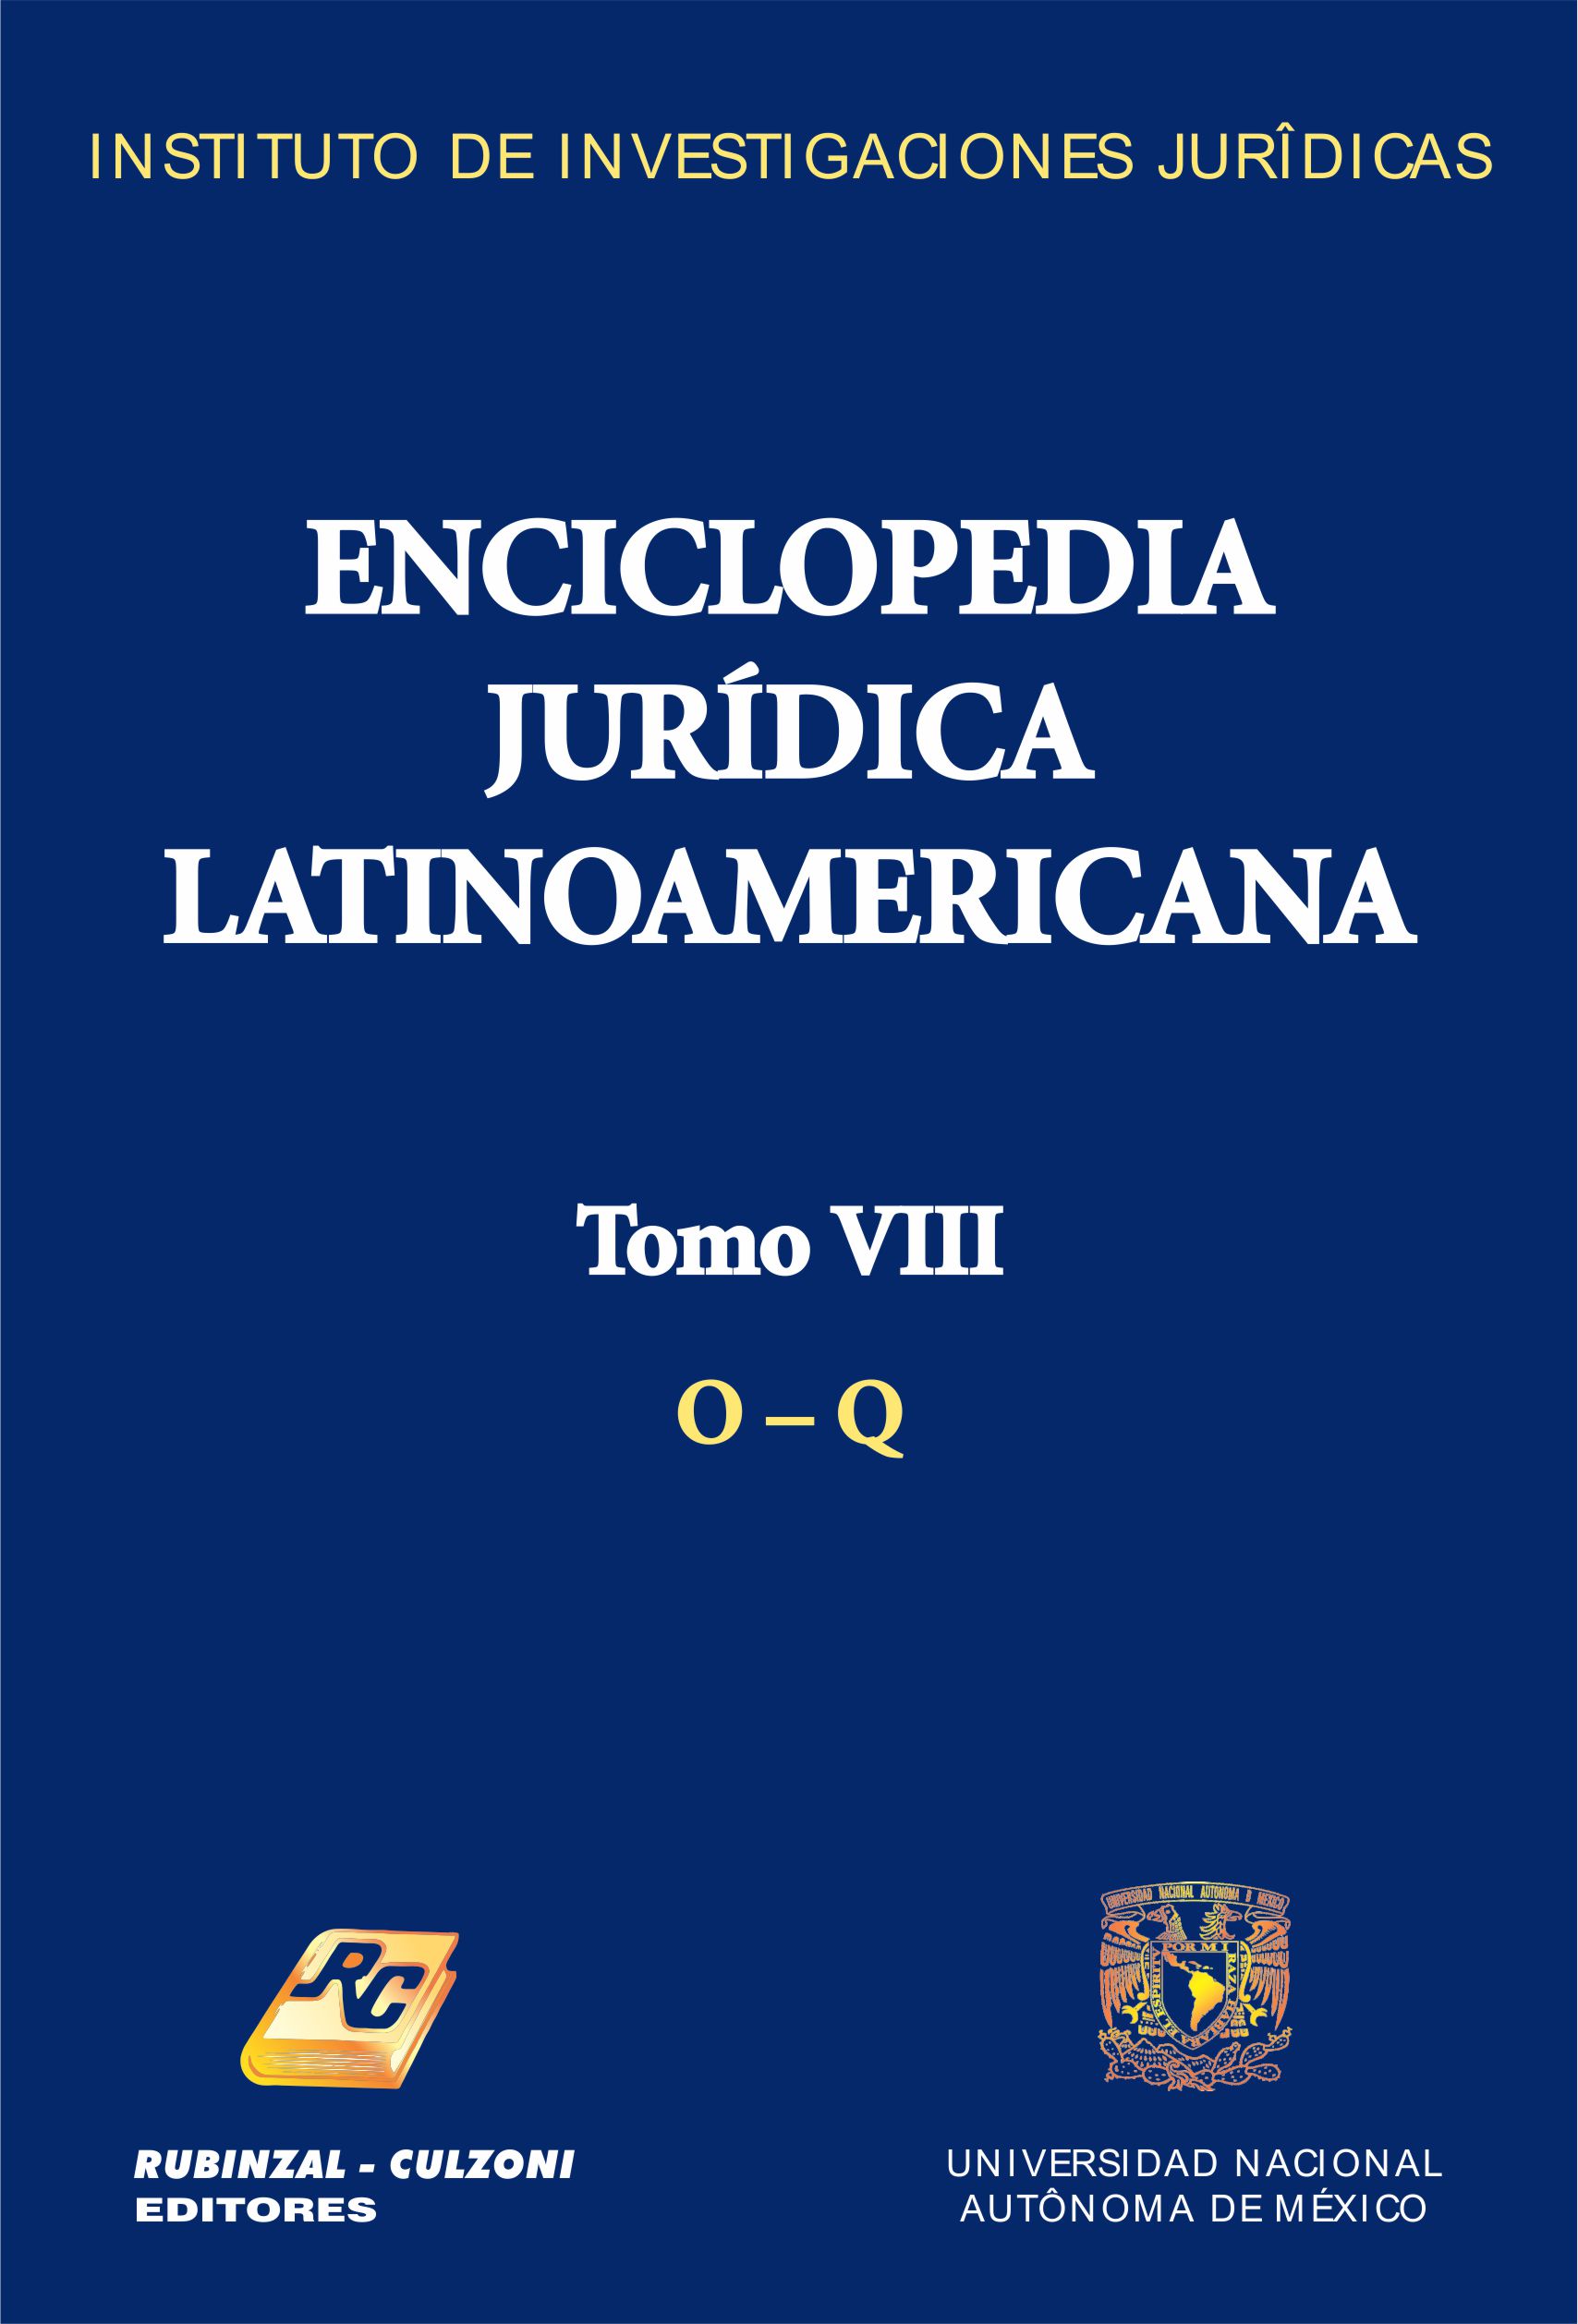 Enciclopedia Jurídica Latinoamericana. - Tomo VIII (O - Q).